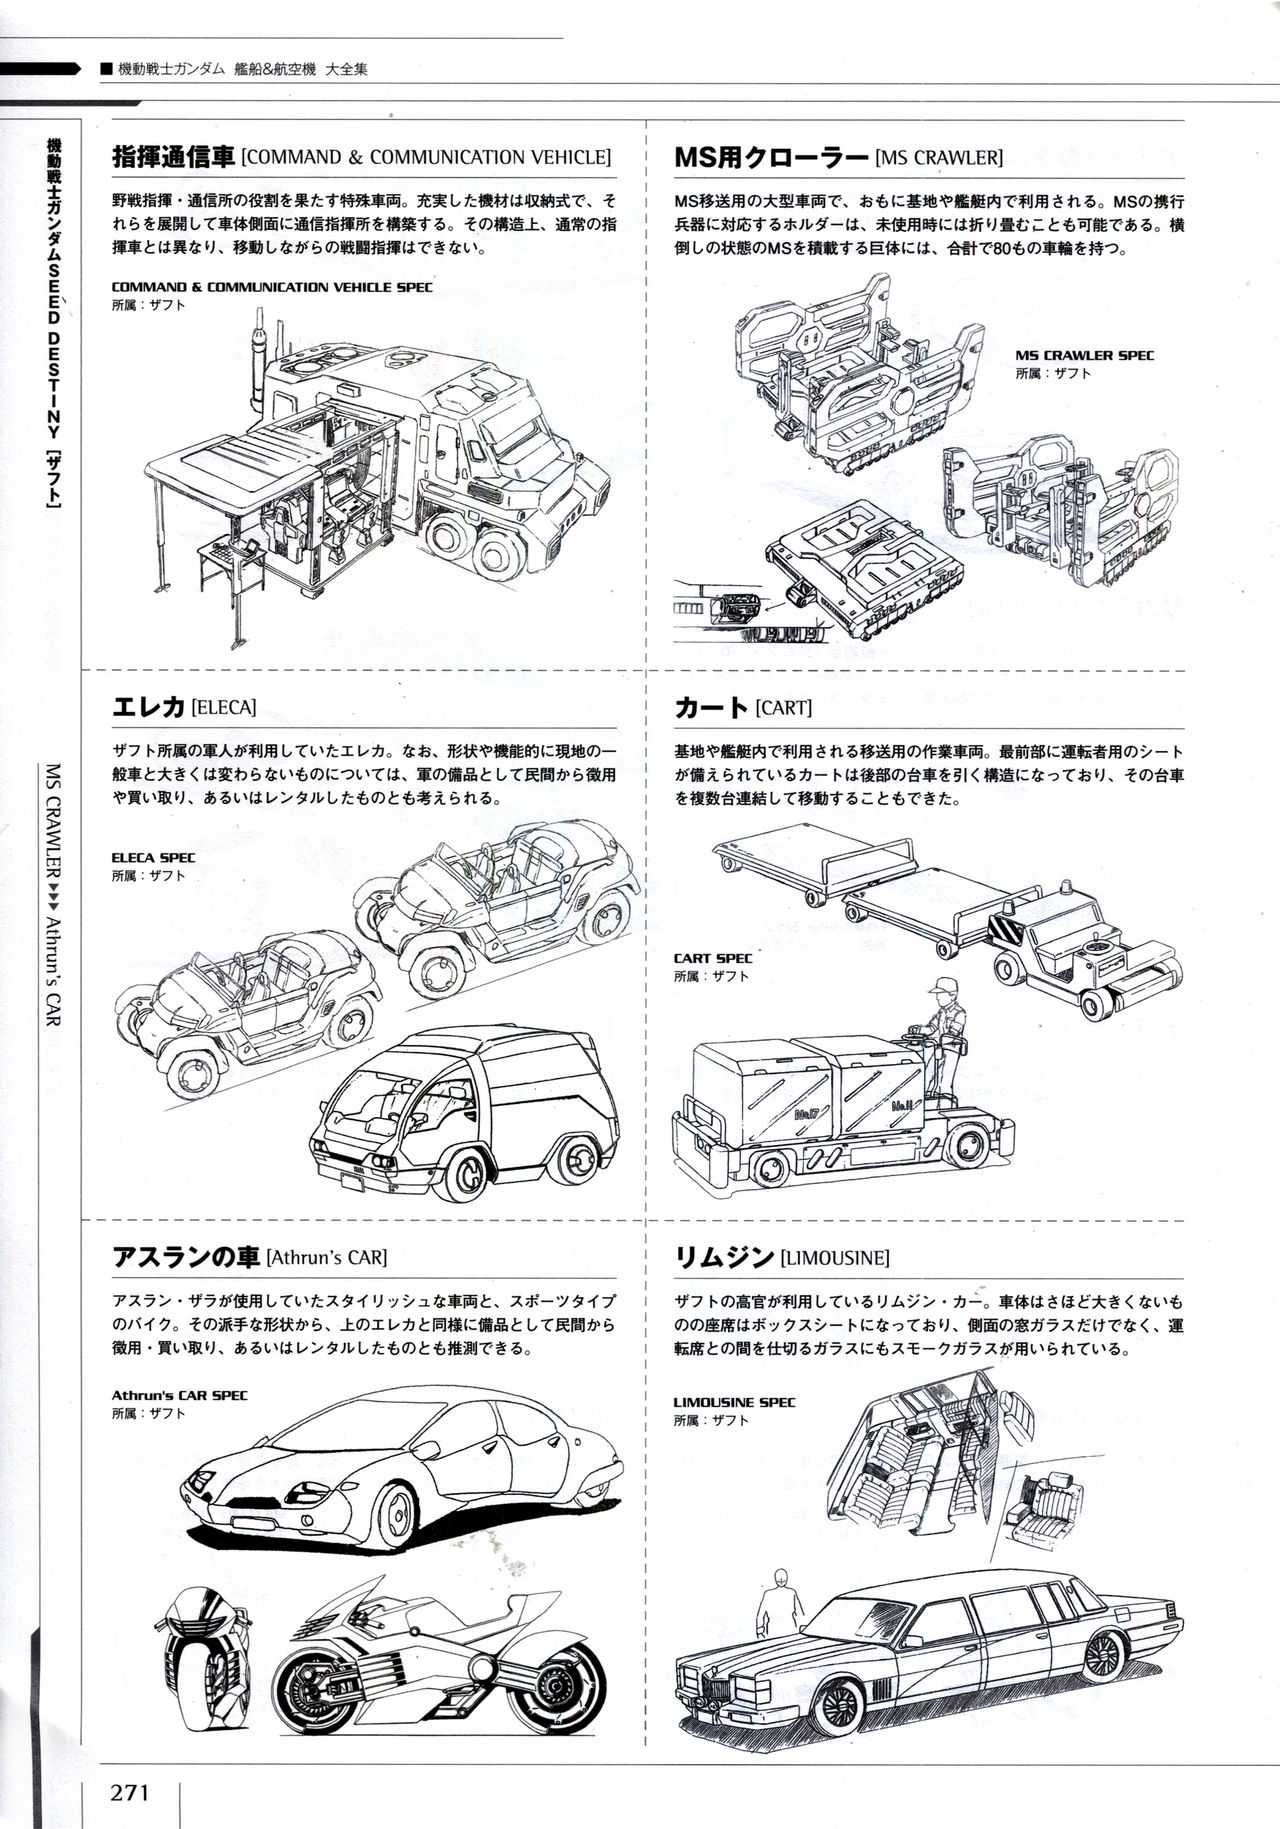 Mobile Suit Gundam - Ship & Aerospace Plane Encyclopedia - Revised Edition 276